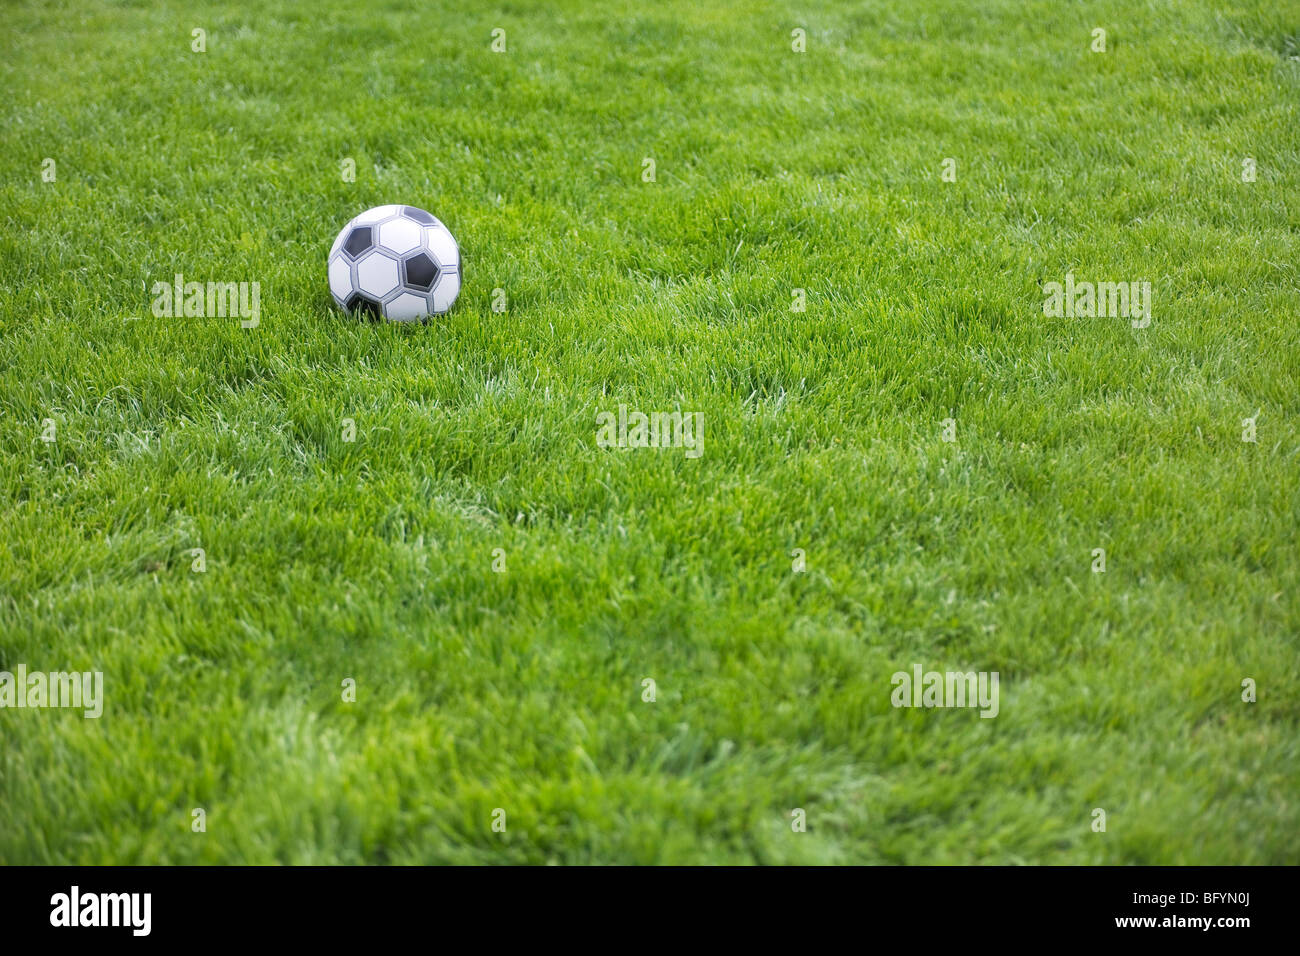 still life of football in grass Stock Photo